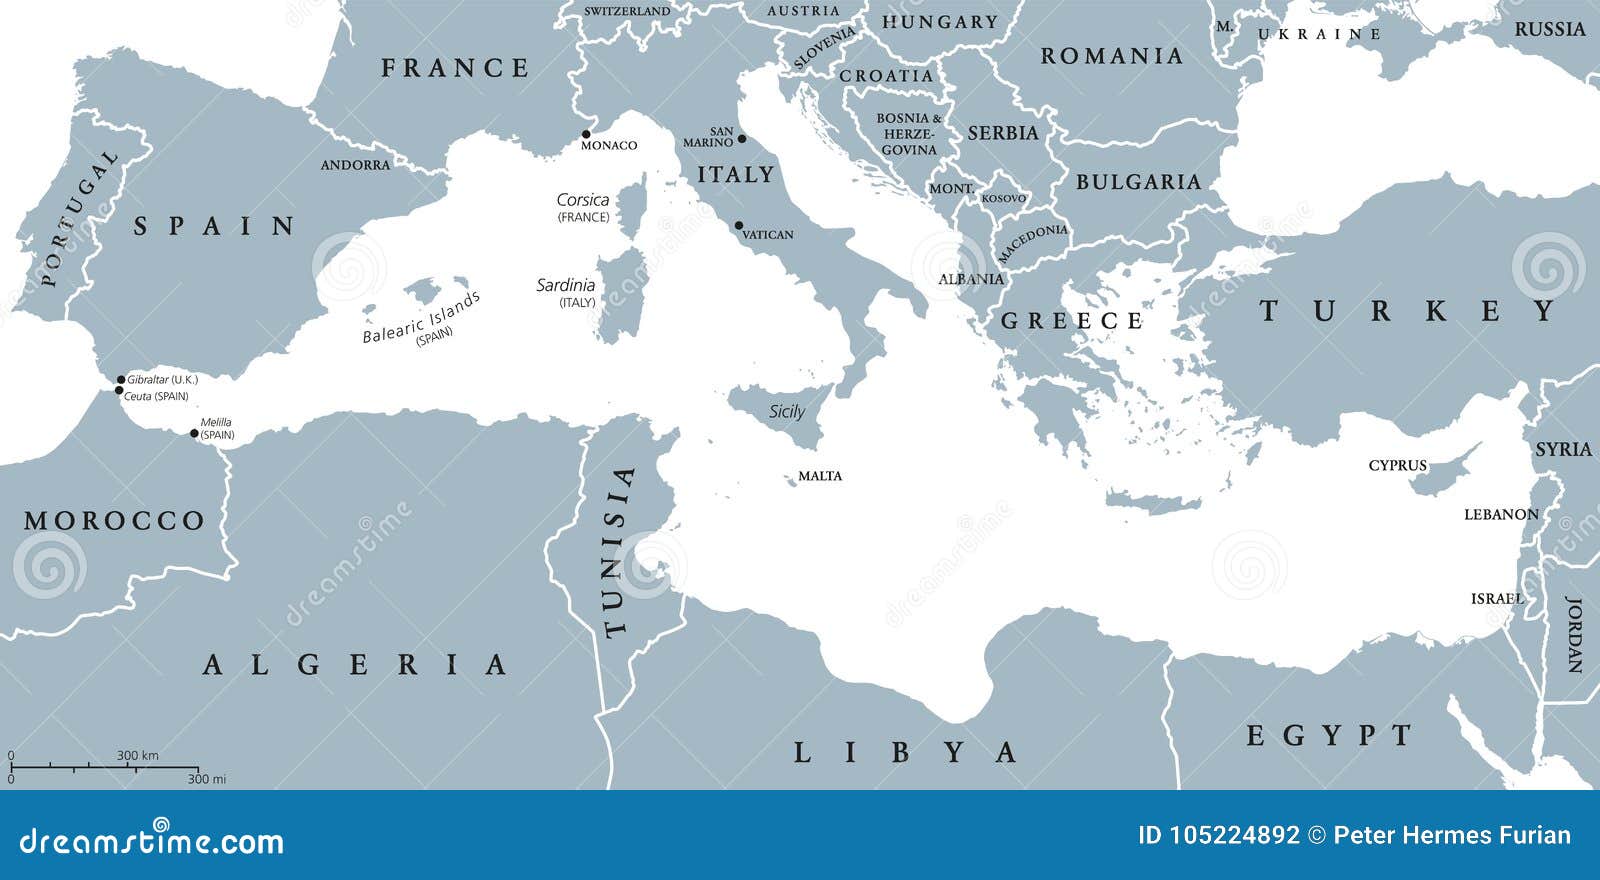 mediterranean sea region countries map